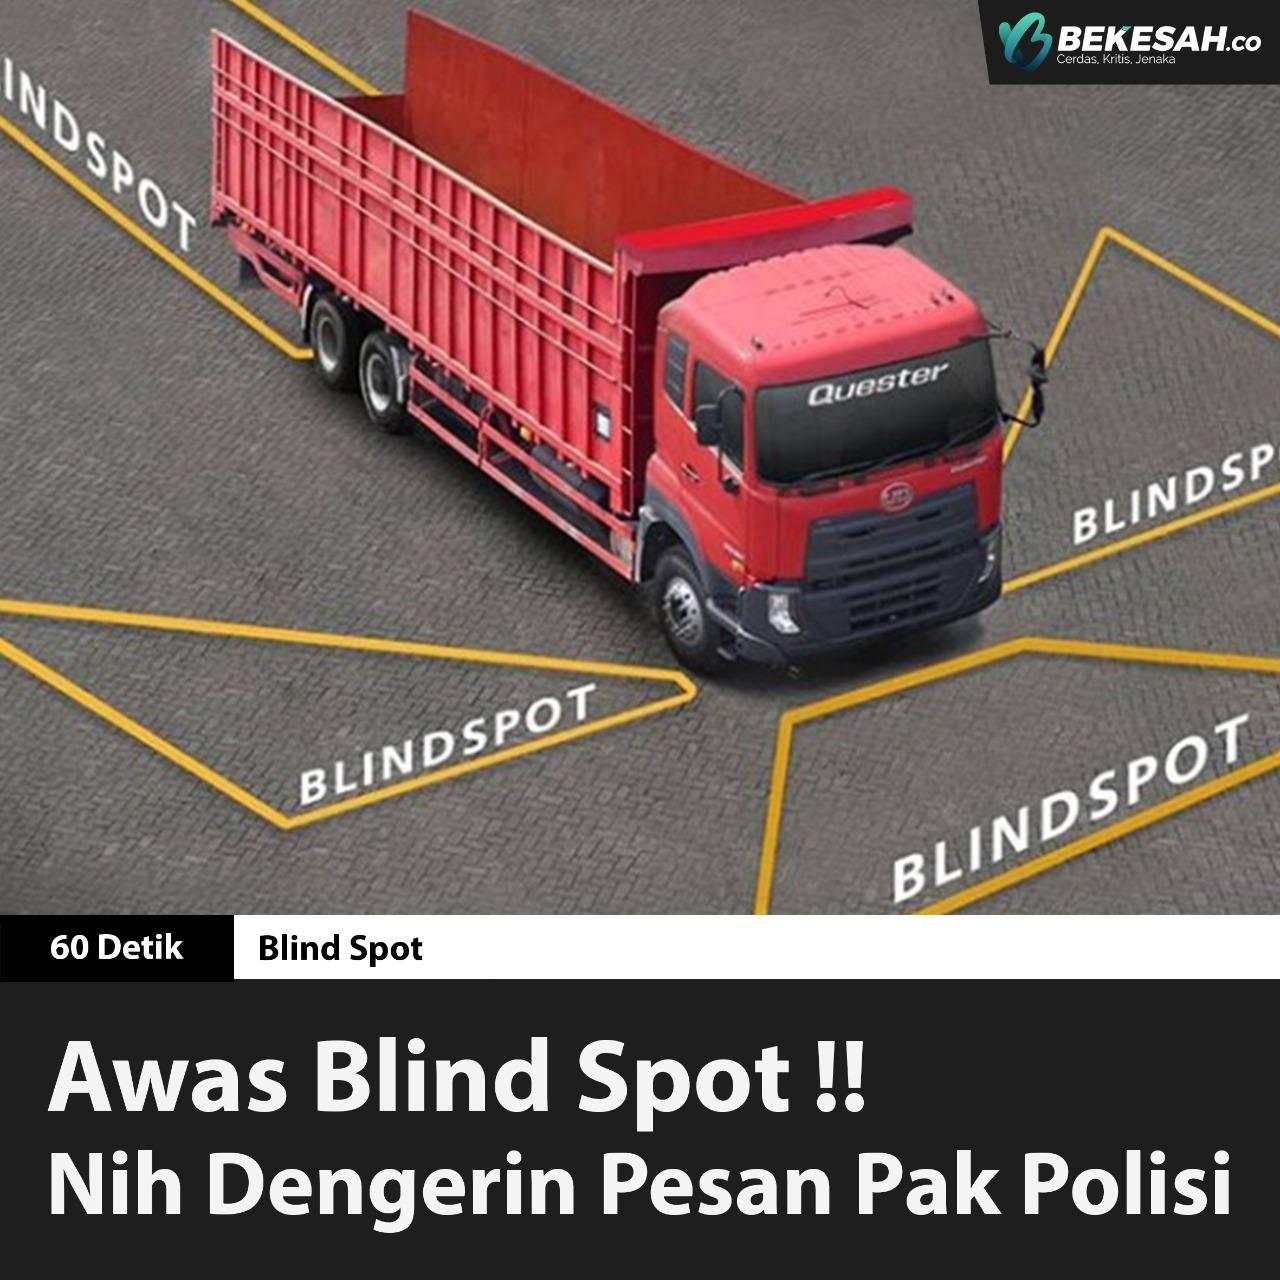 Awas Blind Spot!! Nih Dengerin Pesen Pak Polisi.